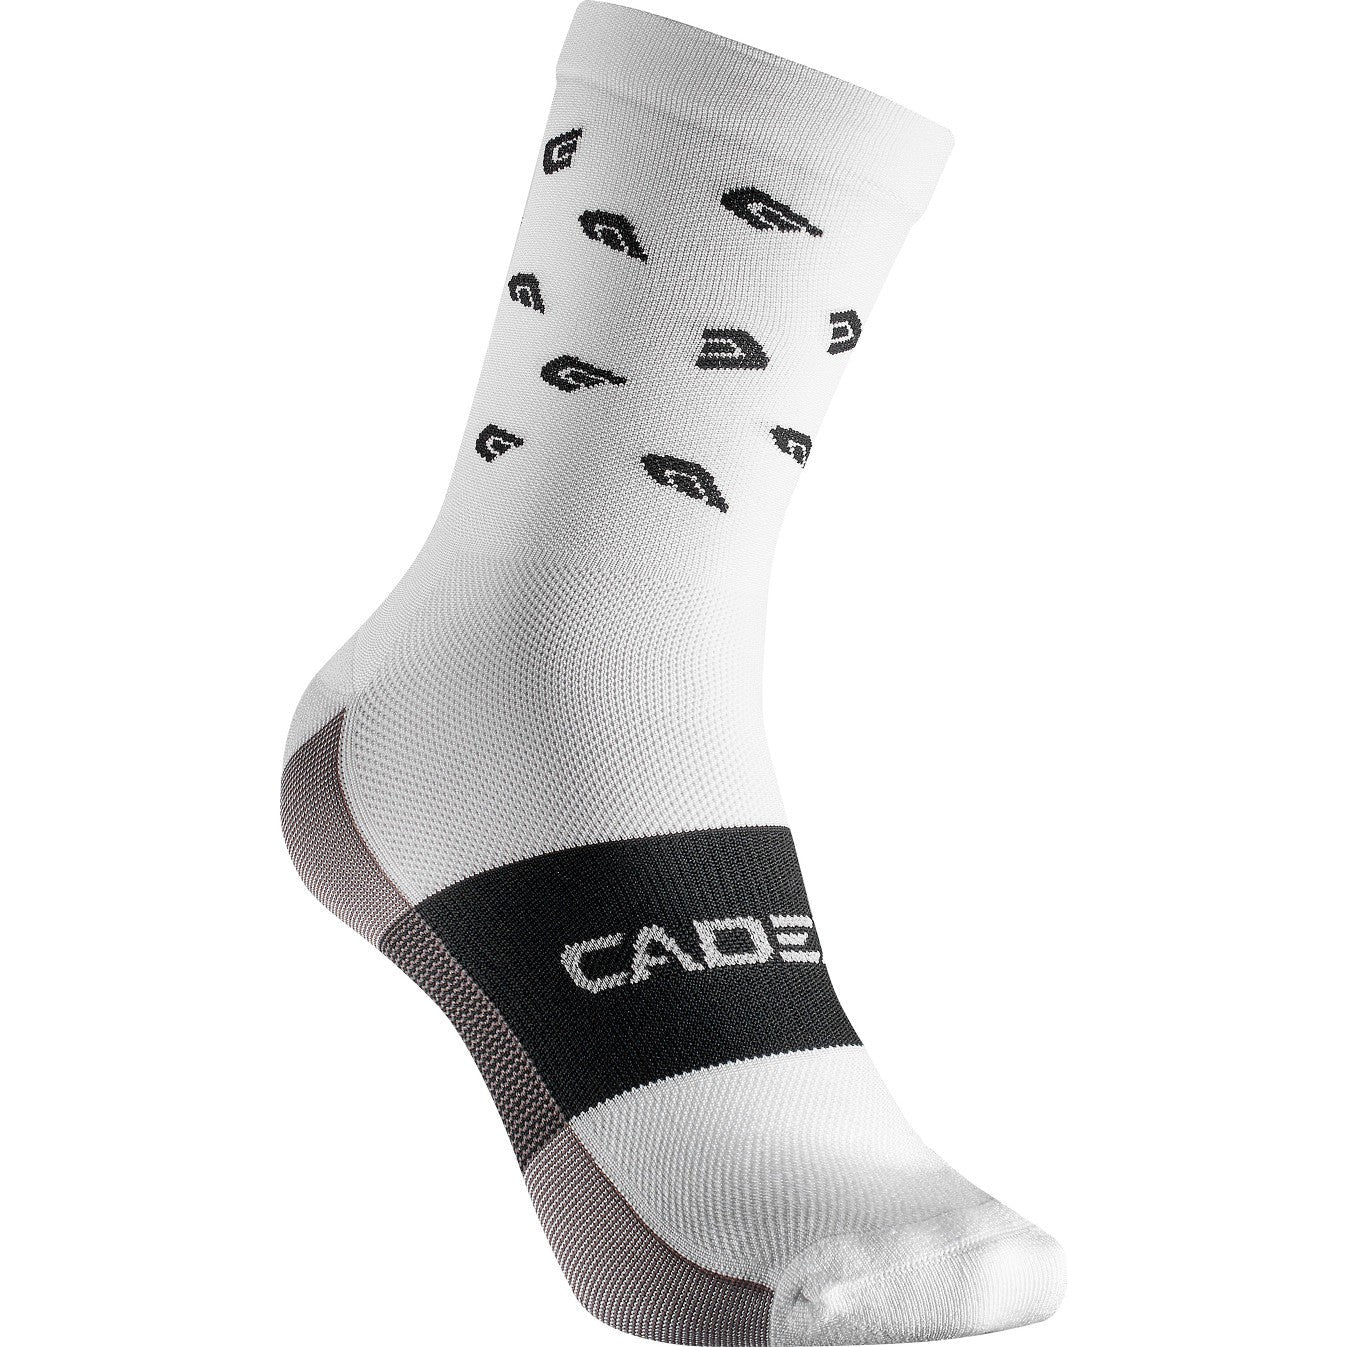 Cadex Cycling Socks - Socks - Bicycle Warehouse